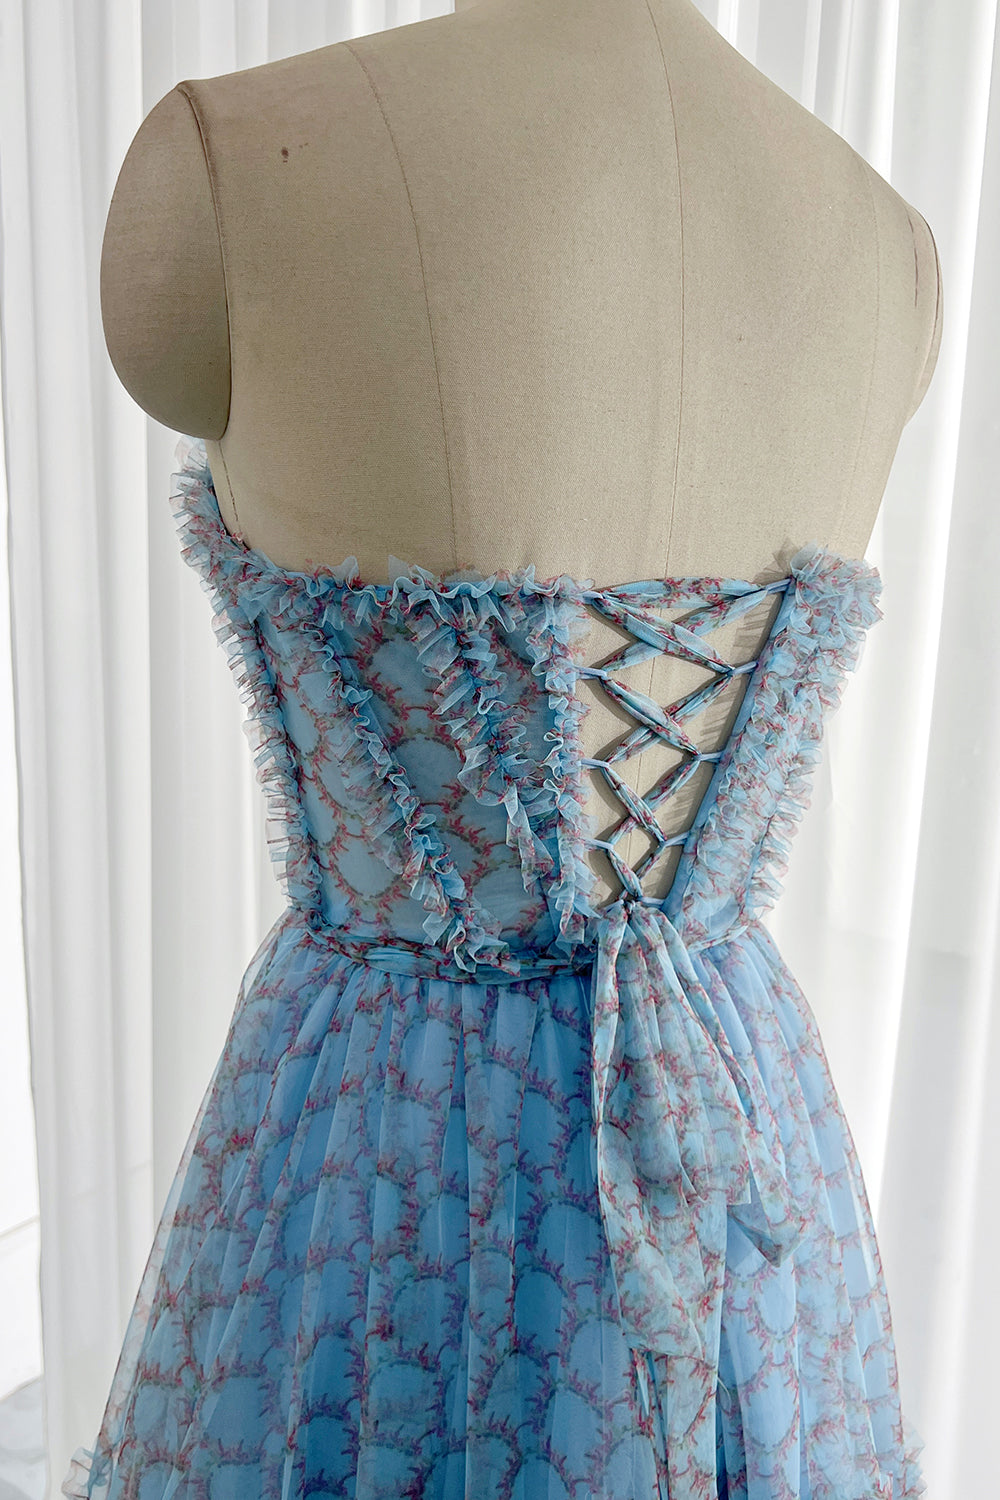 MissJophiel Strapless Print Tulle Midi Prom Dress with Lace Up Back